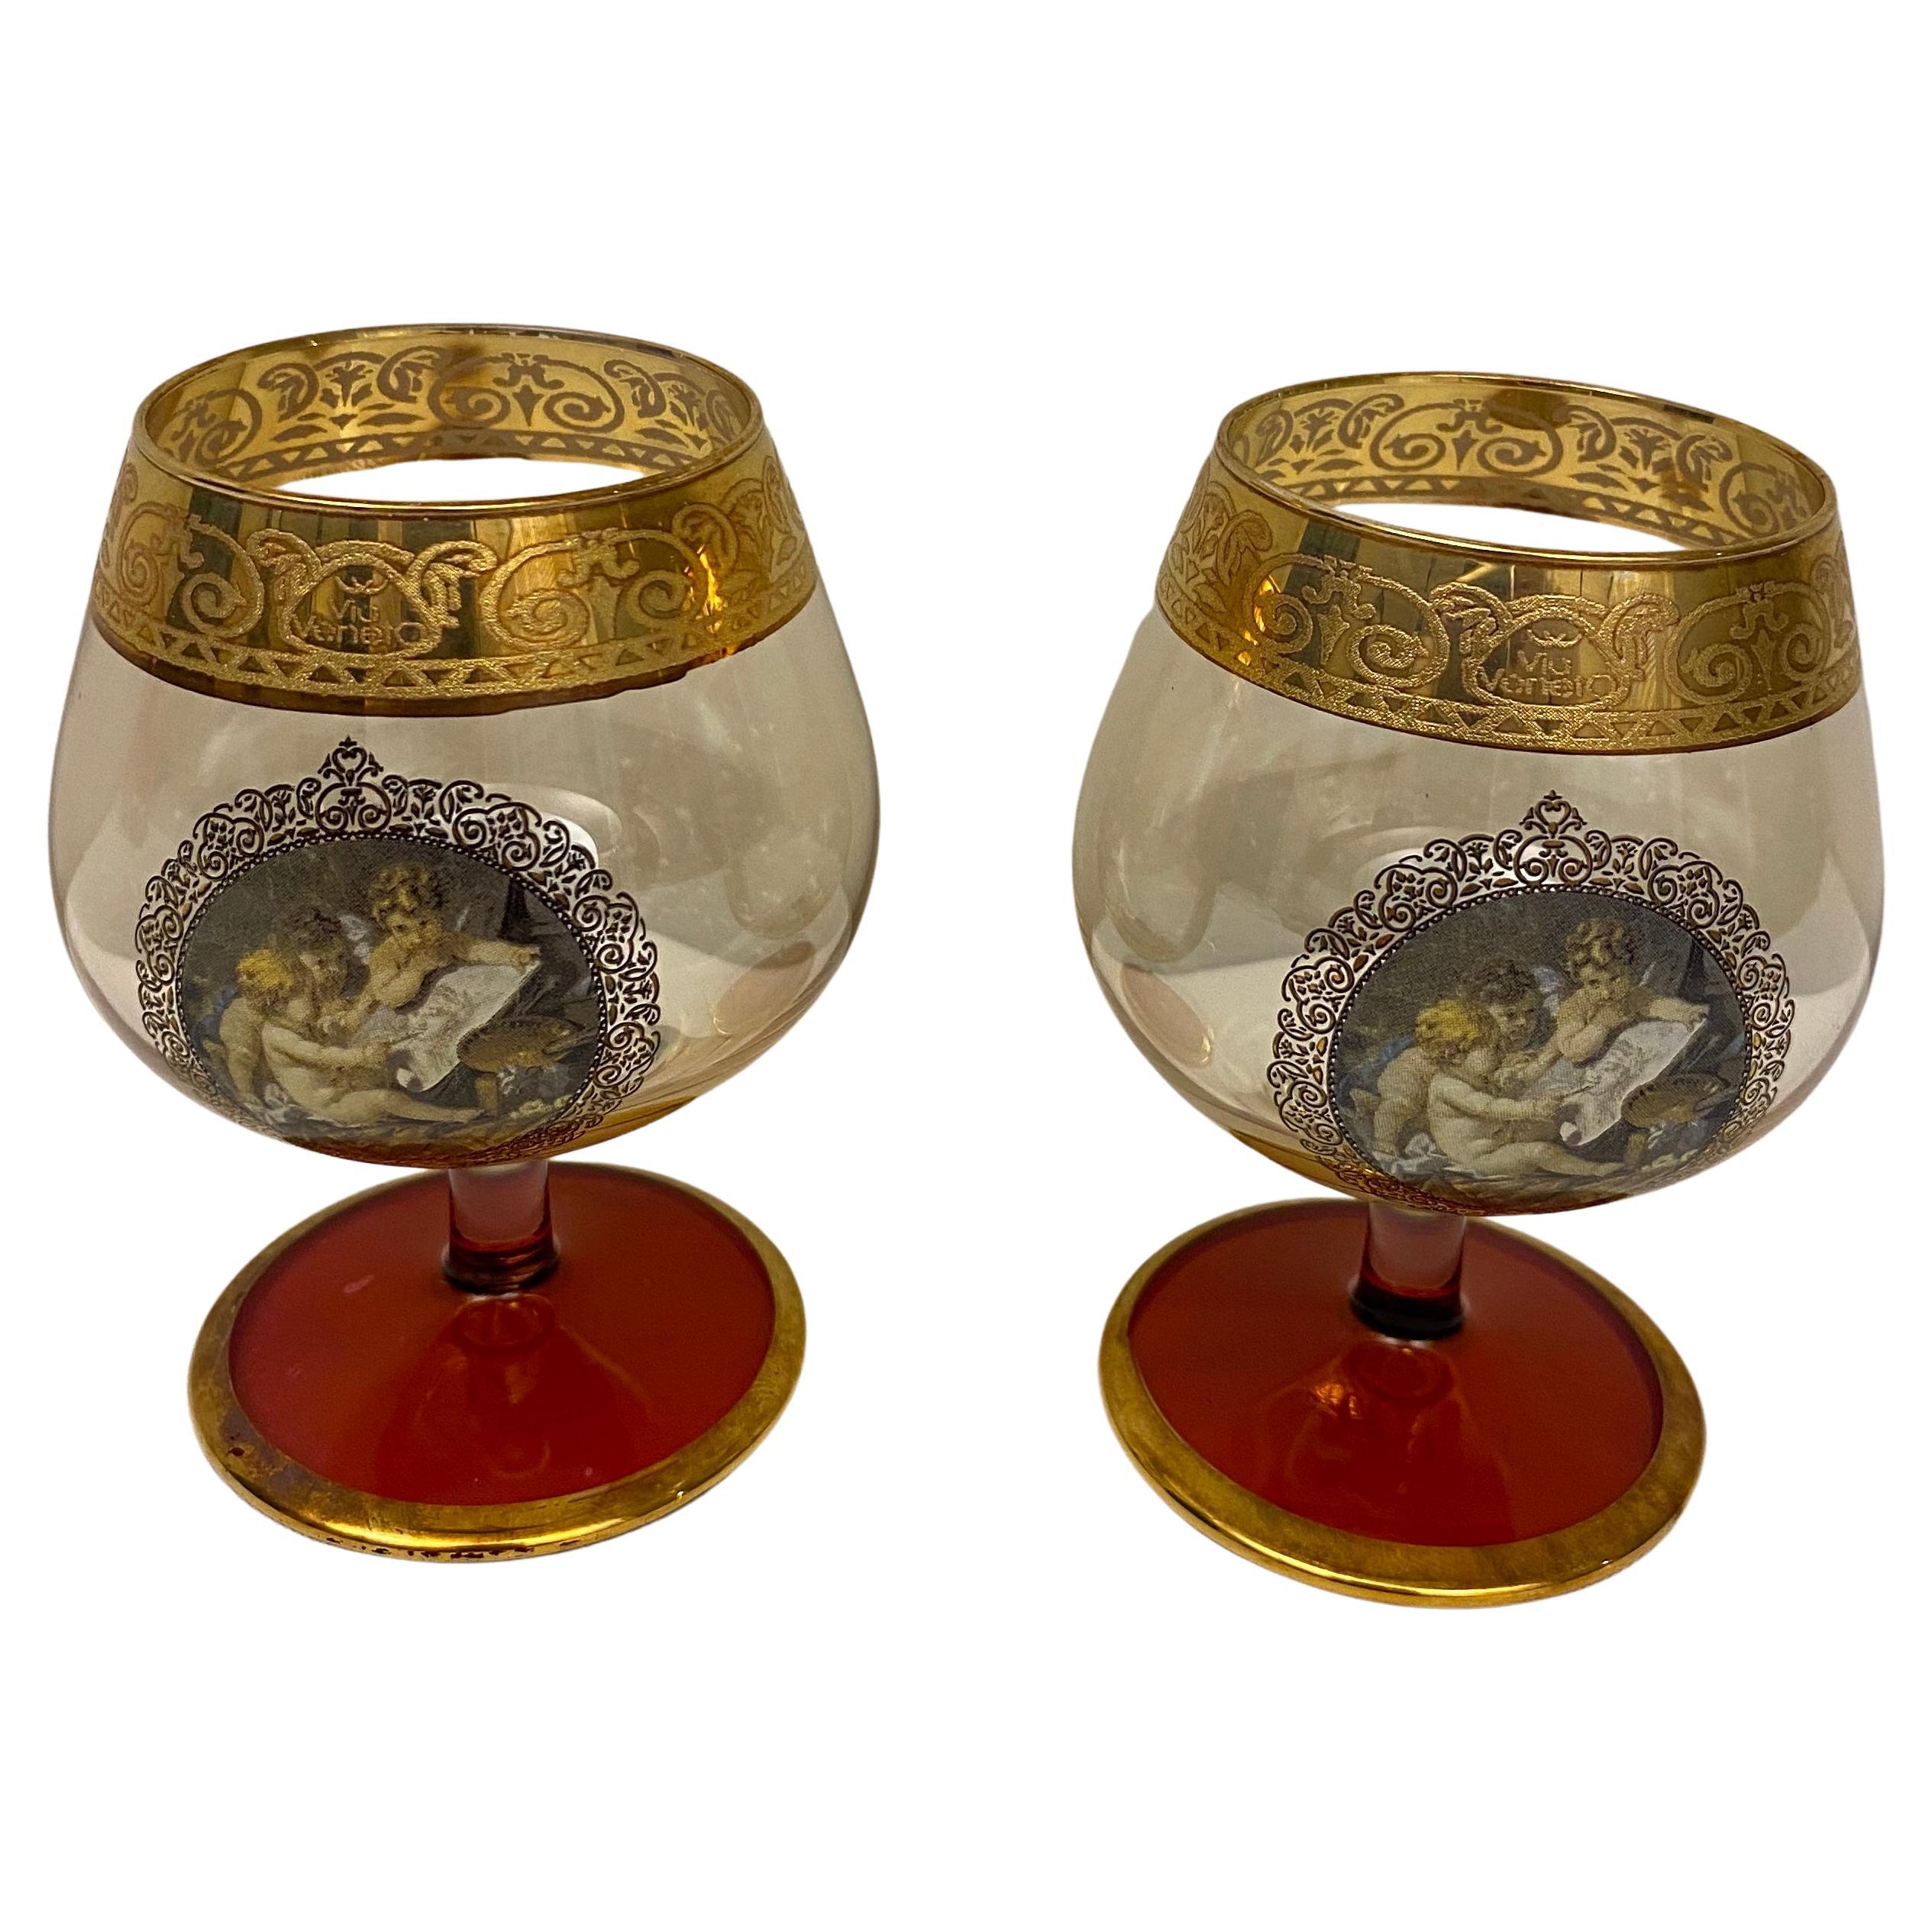 Set of 2 Via Veneto Cordial, Cognac or Liquor Glasses by Spiegelau For Sale